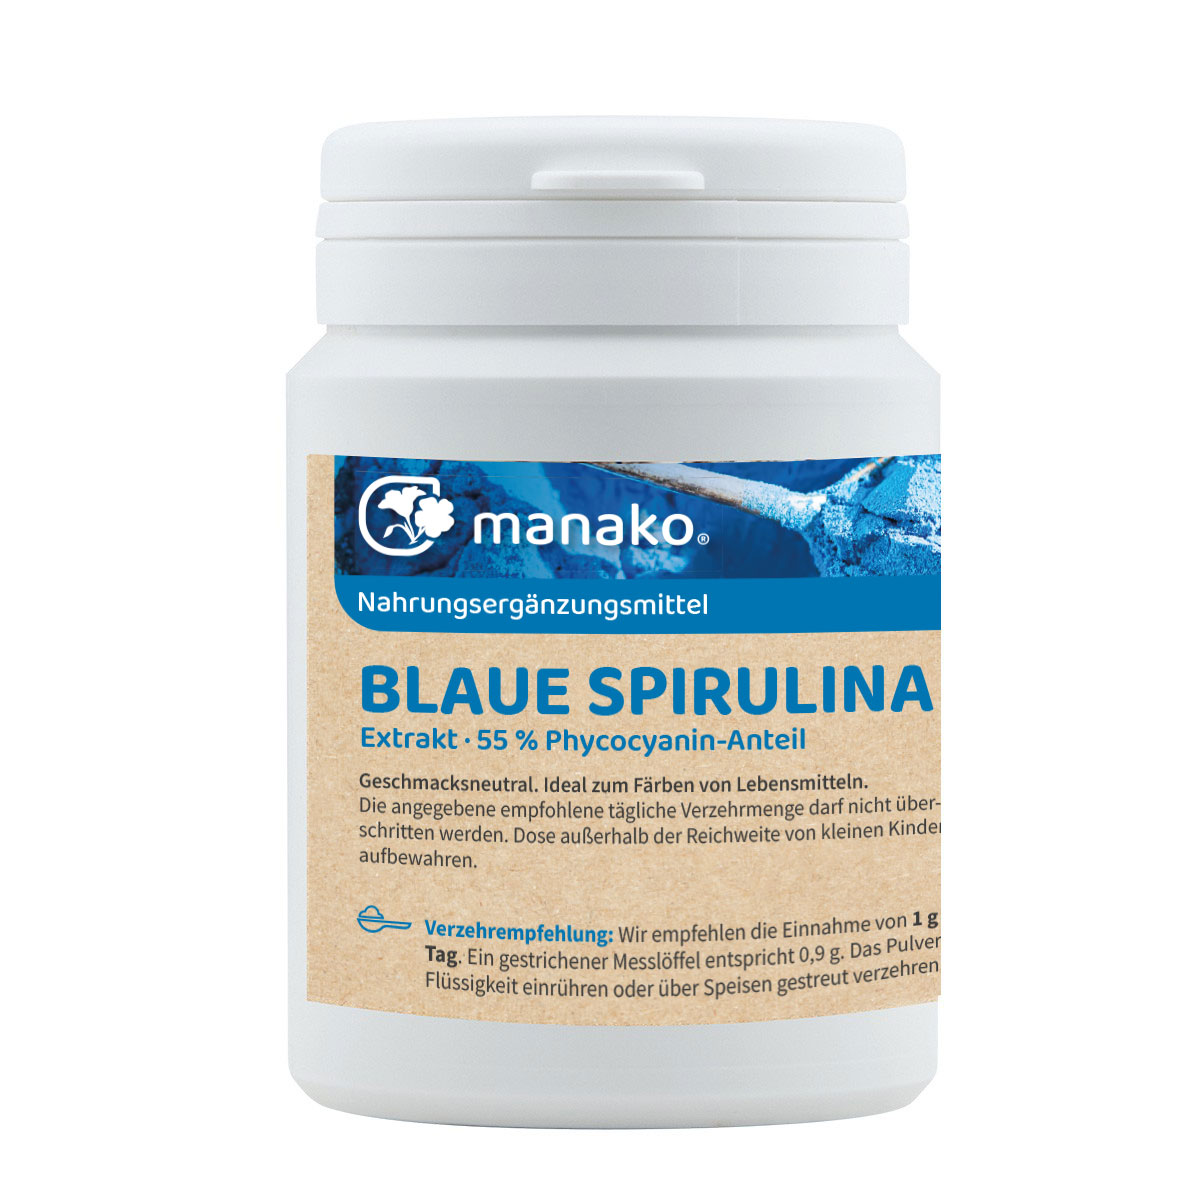 manako Blaue Spirulina Extrakt, 55% Phycocyanin Anteil, Dose a 100g